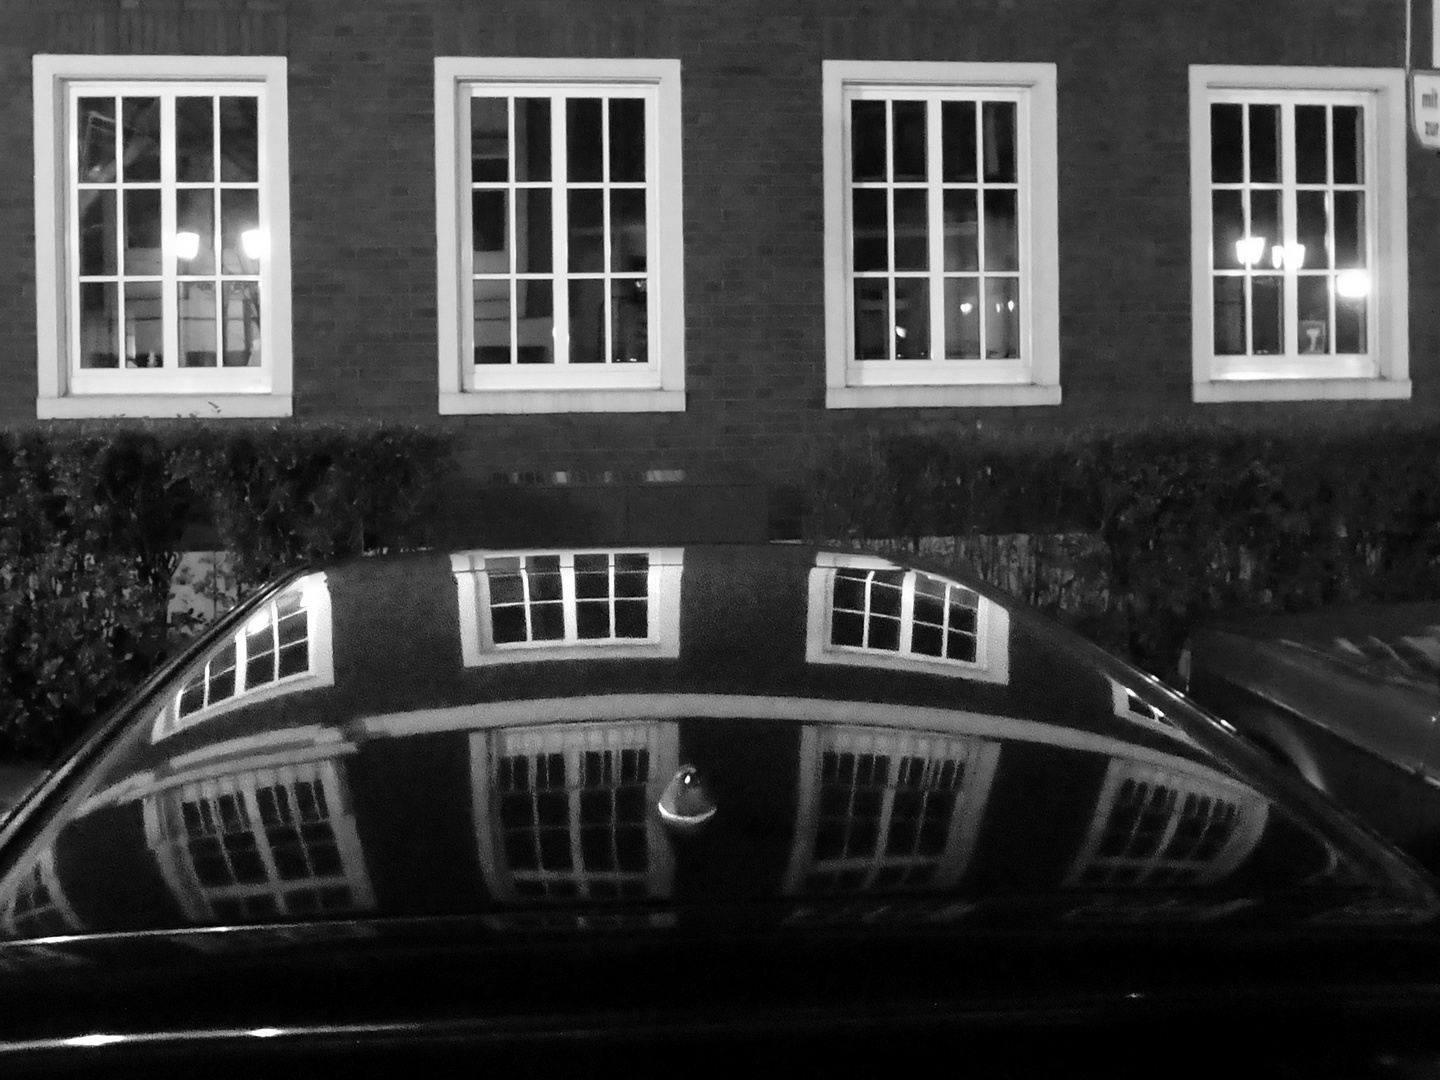 Night reflections